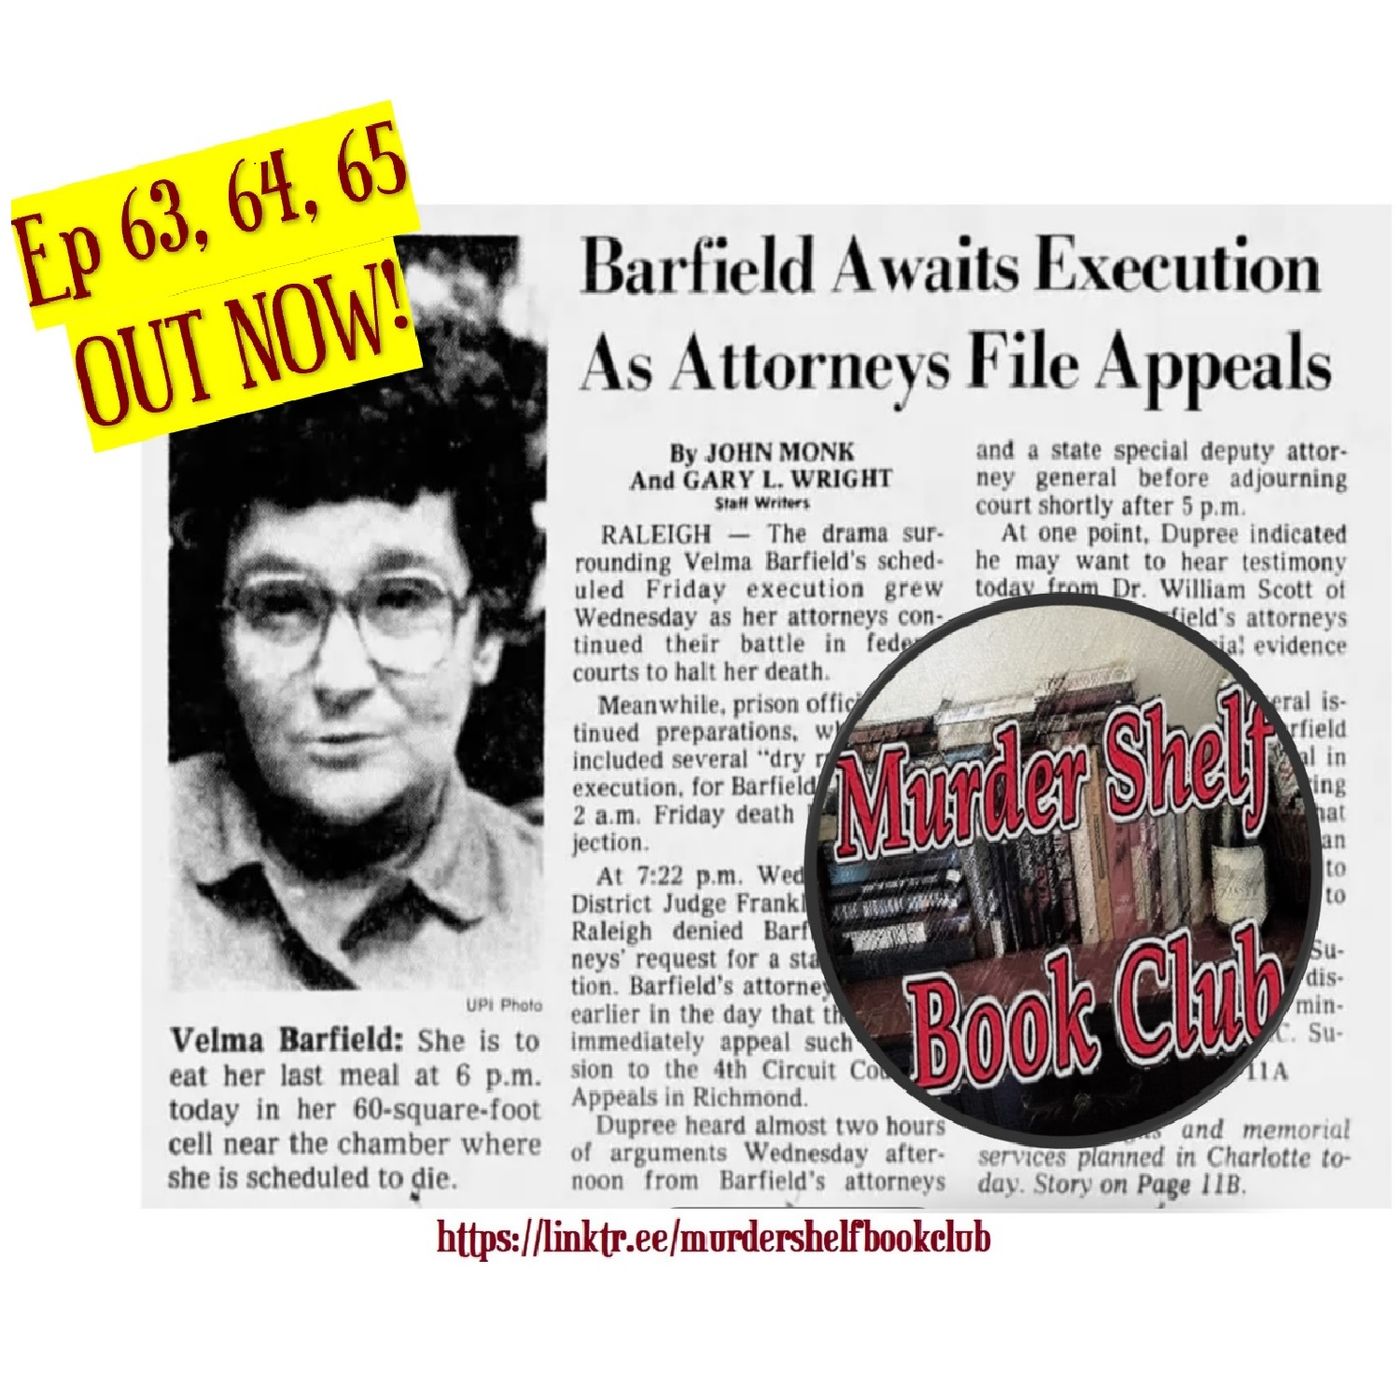 True Story of Velma Barfield’s life by Murder Shelf Book Club